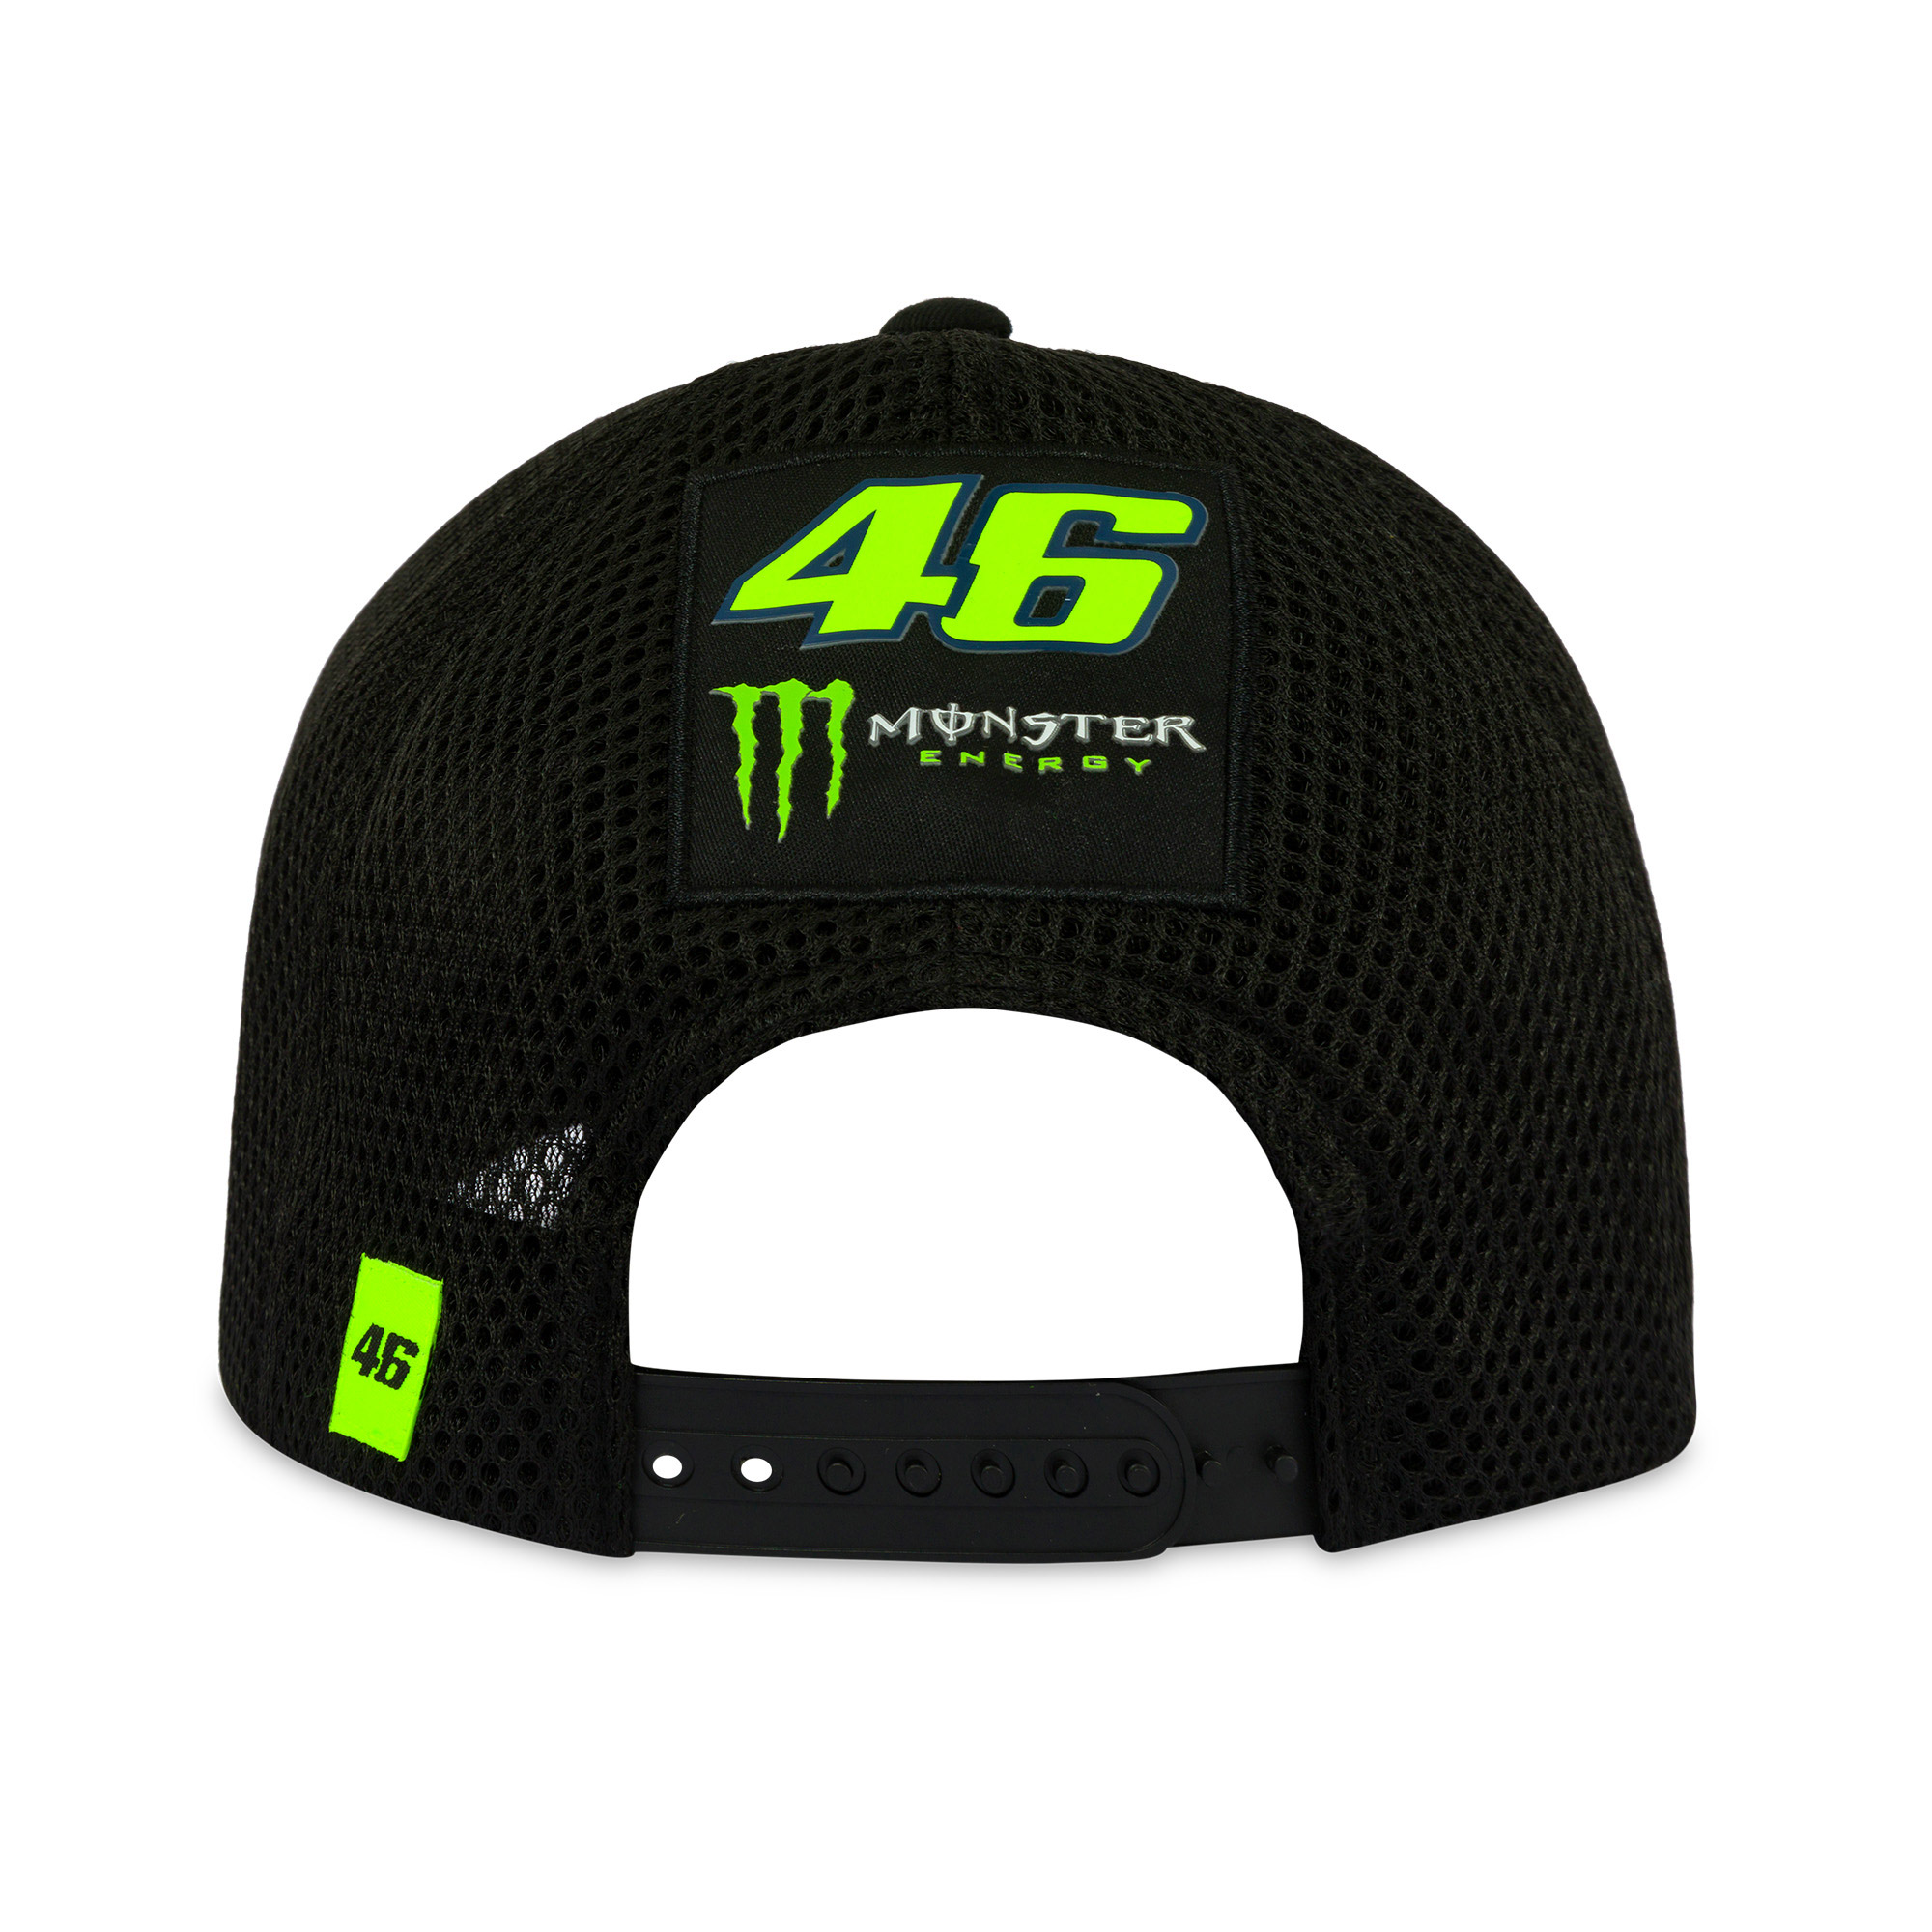 Valentino Rossi Monster Energy cap "46" - black